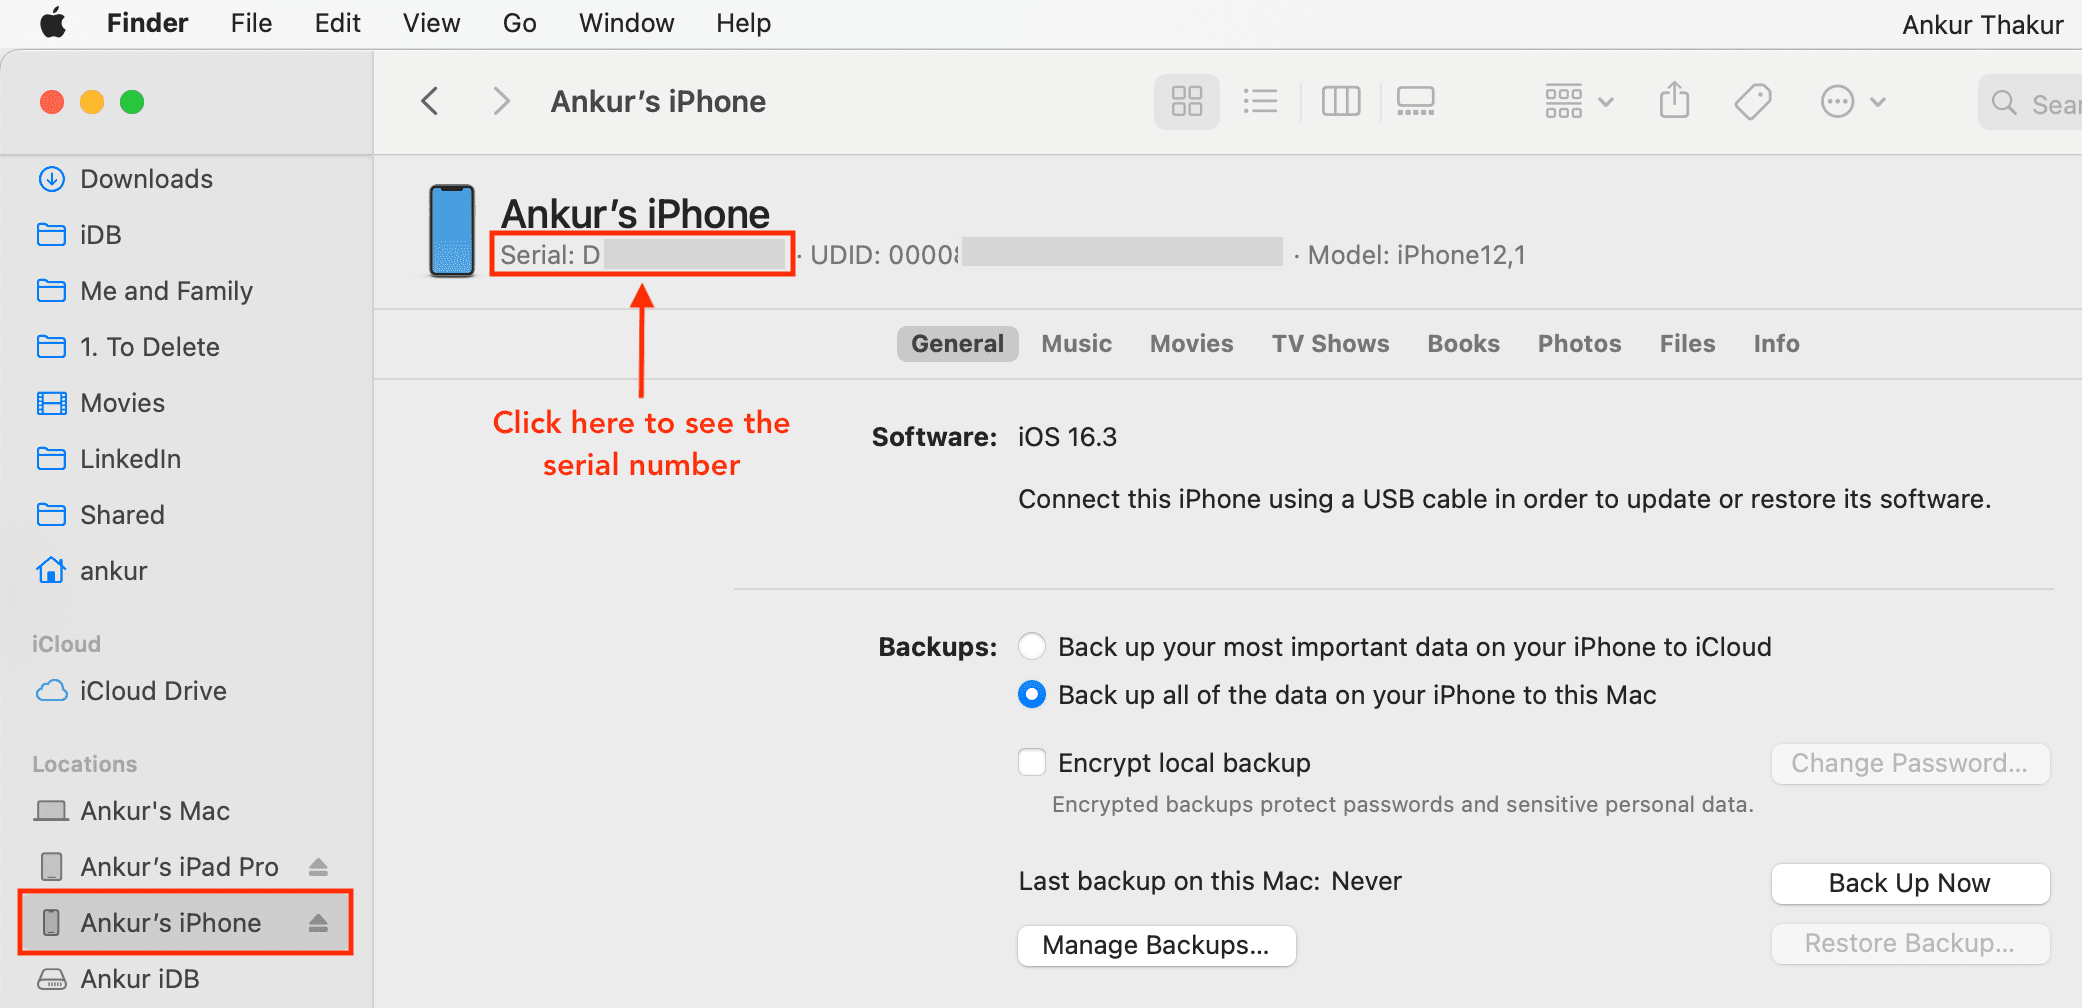 See iPhone serial number in Finder on Mac